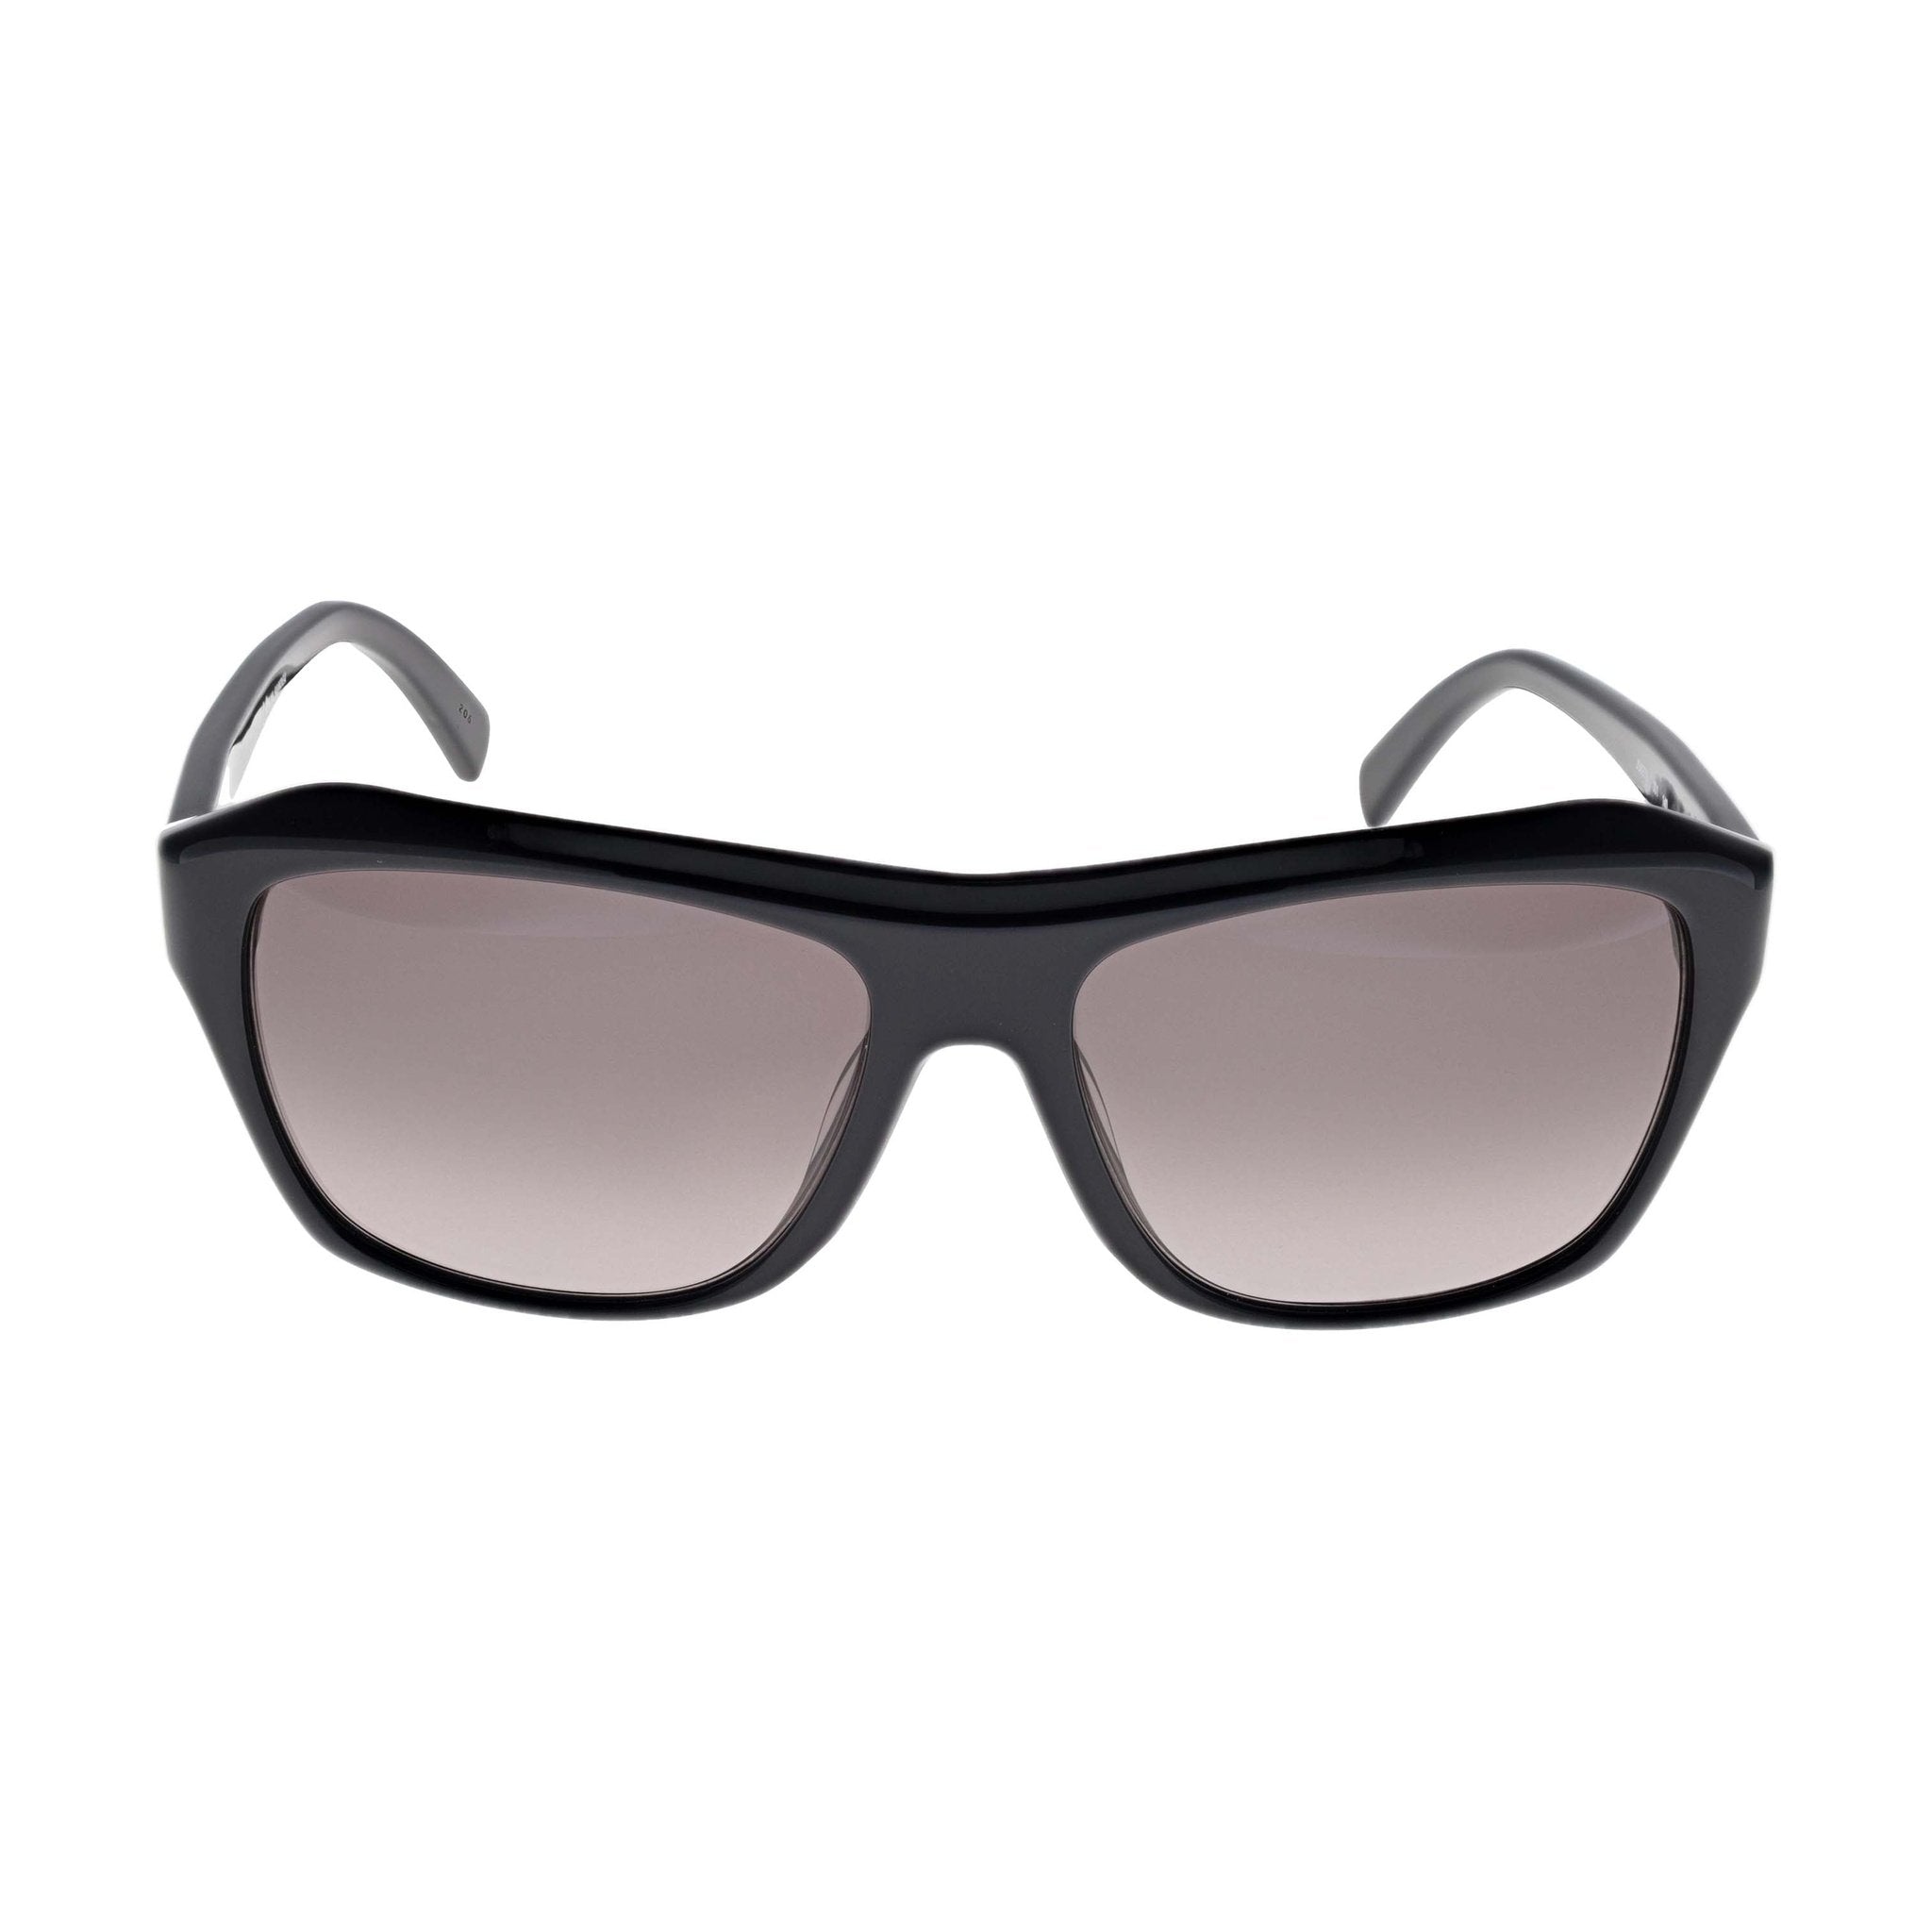 Jil Sander Sunglasses - JS697S - Black